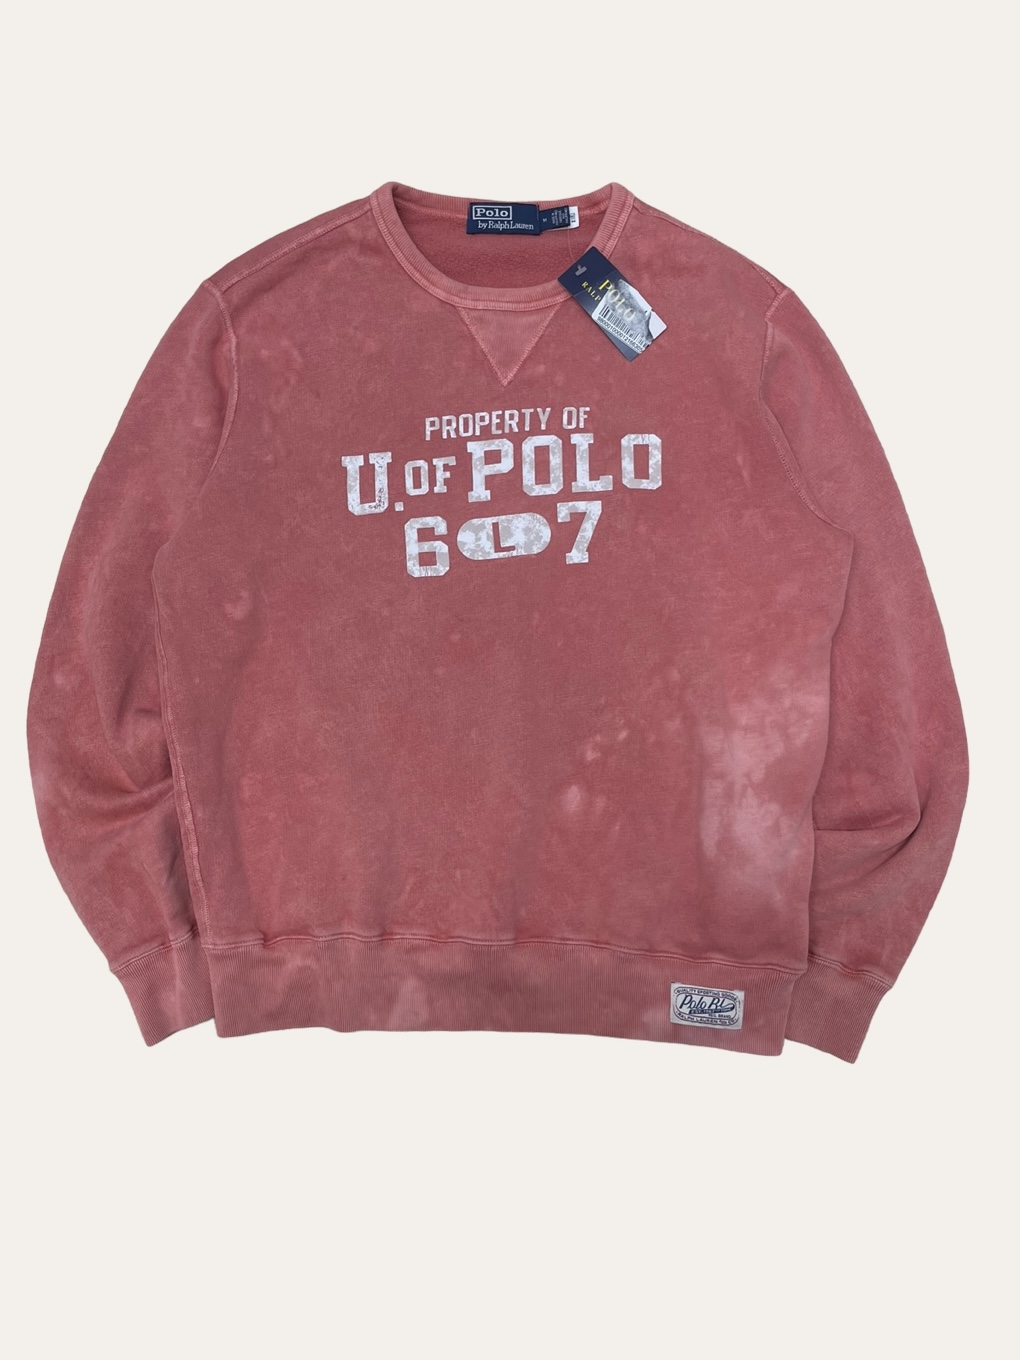 Polo ralph lauren coral pink POLO 67 printing sweatshirt M